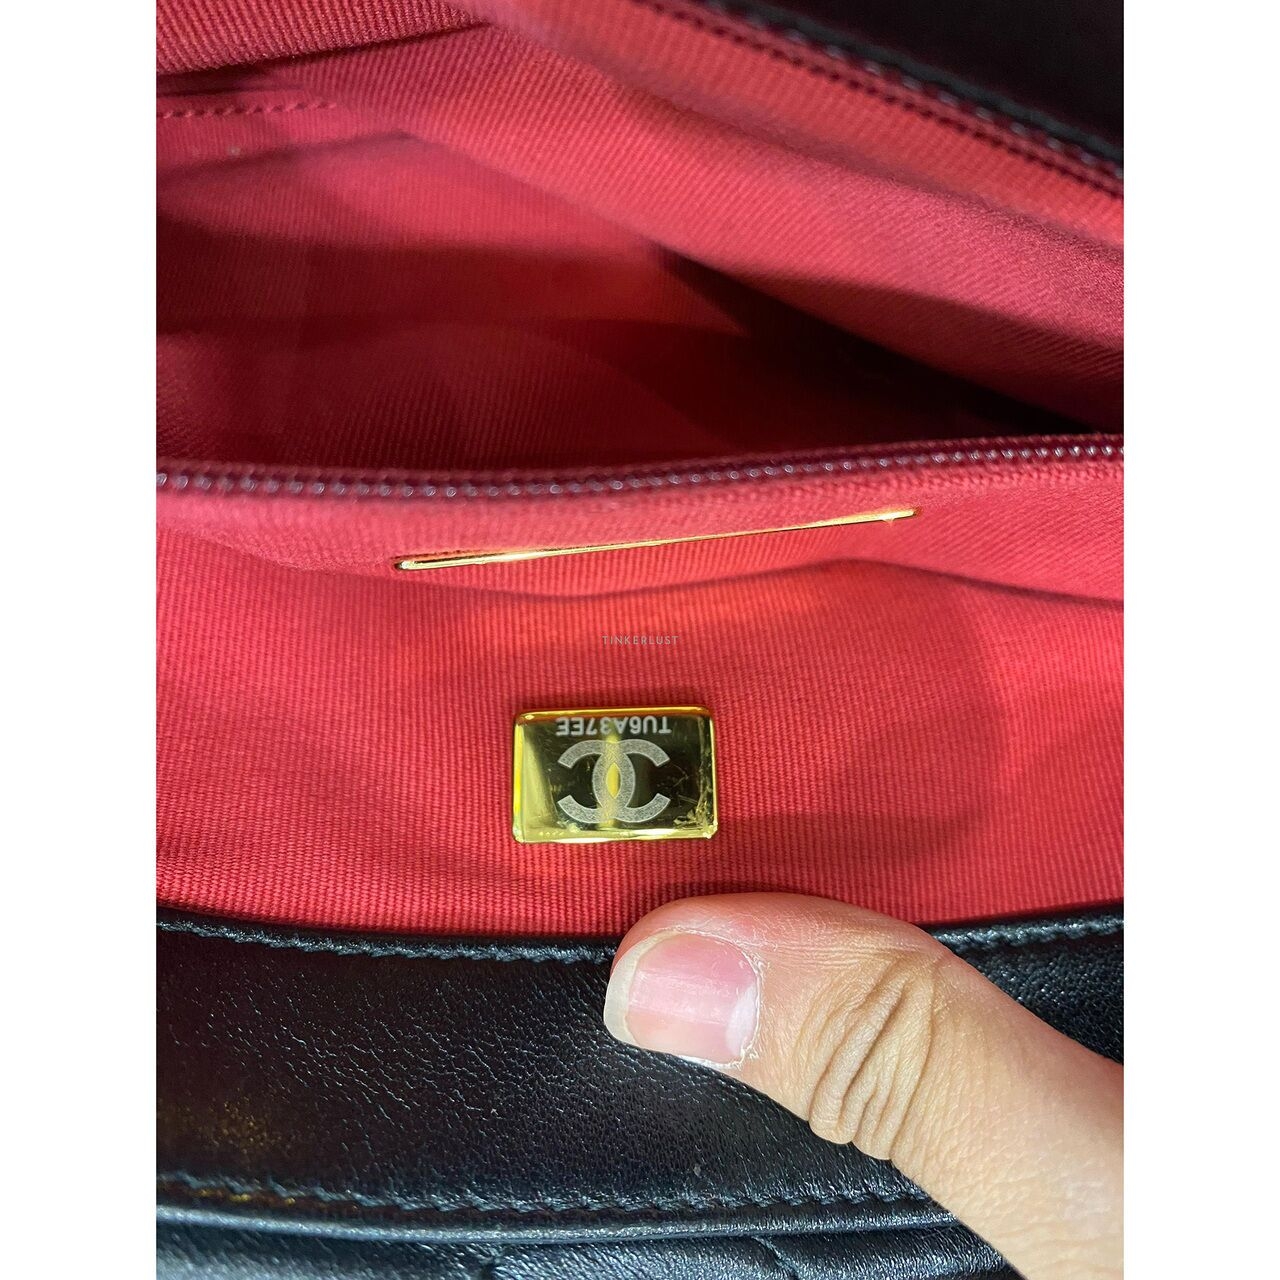 Chanel C19 Black Small SHW Chip Sling Bag